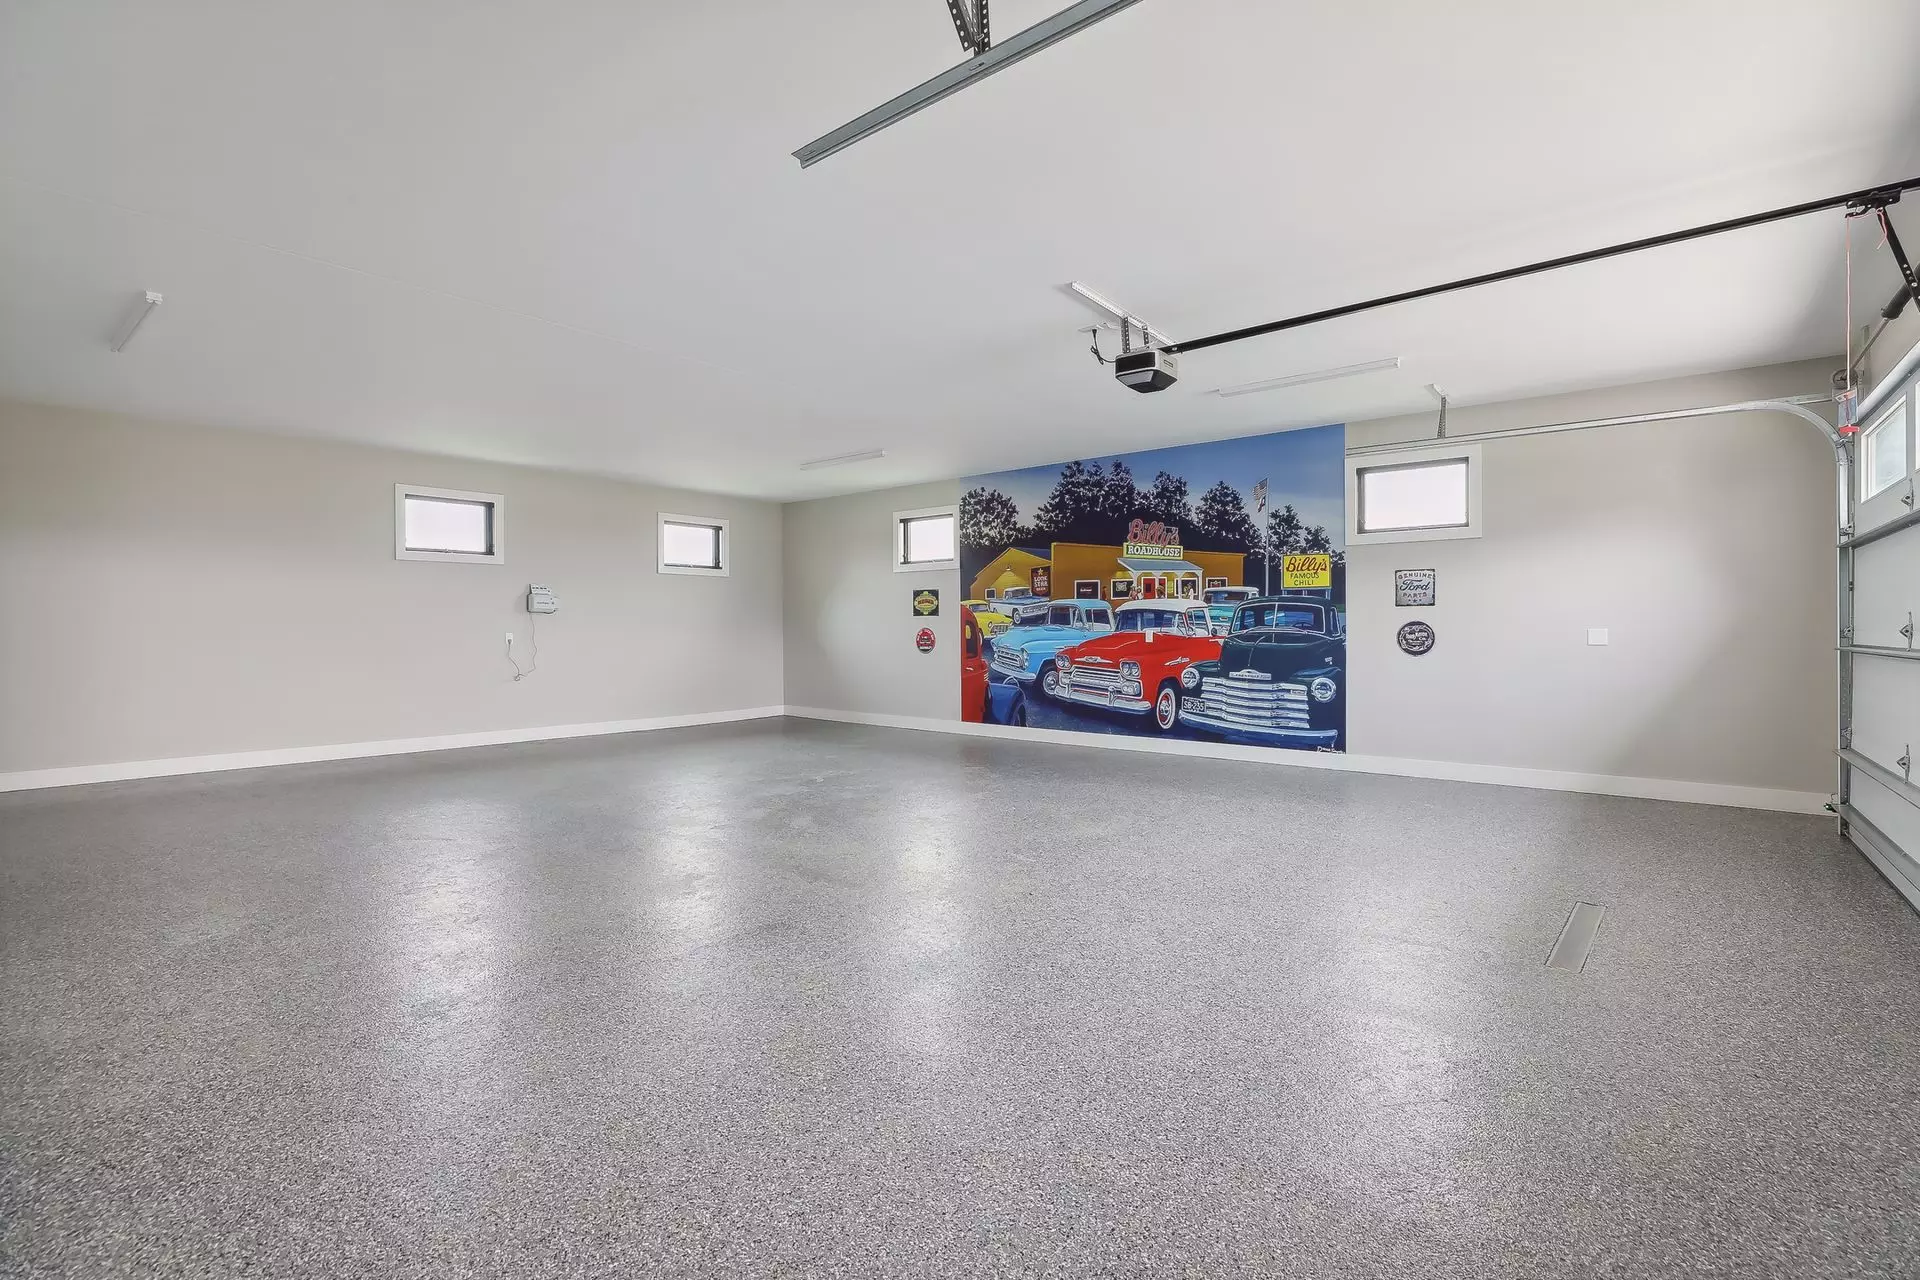 4 Car Oversized Heated Garage with finished walls, epoxy floors and windows